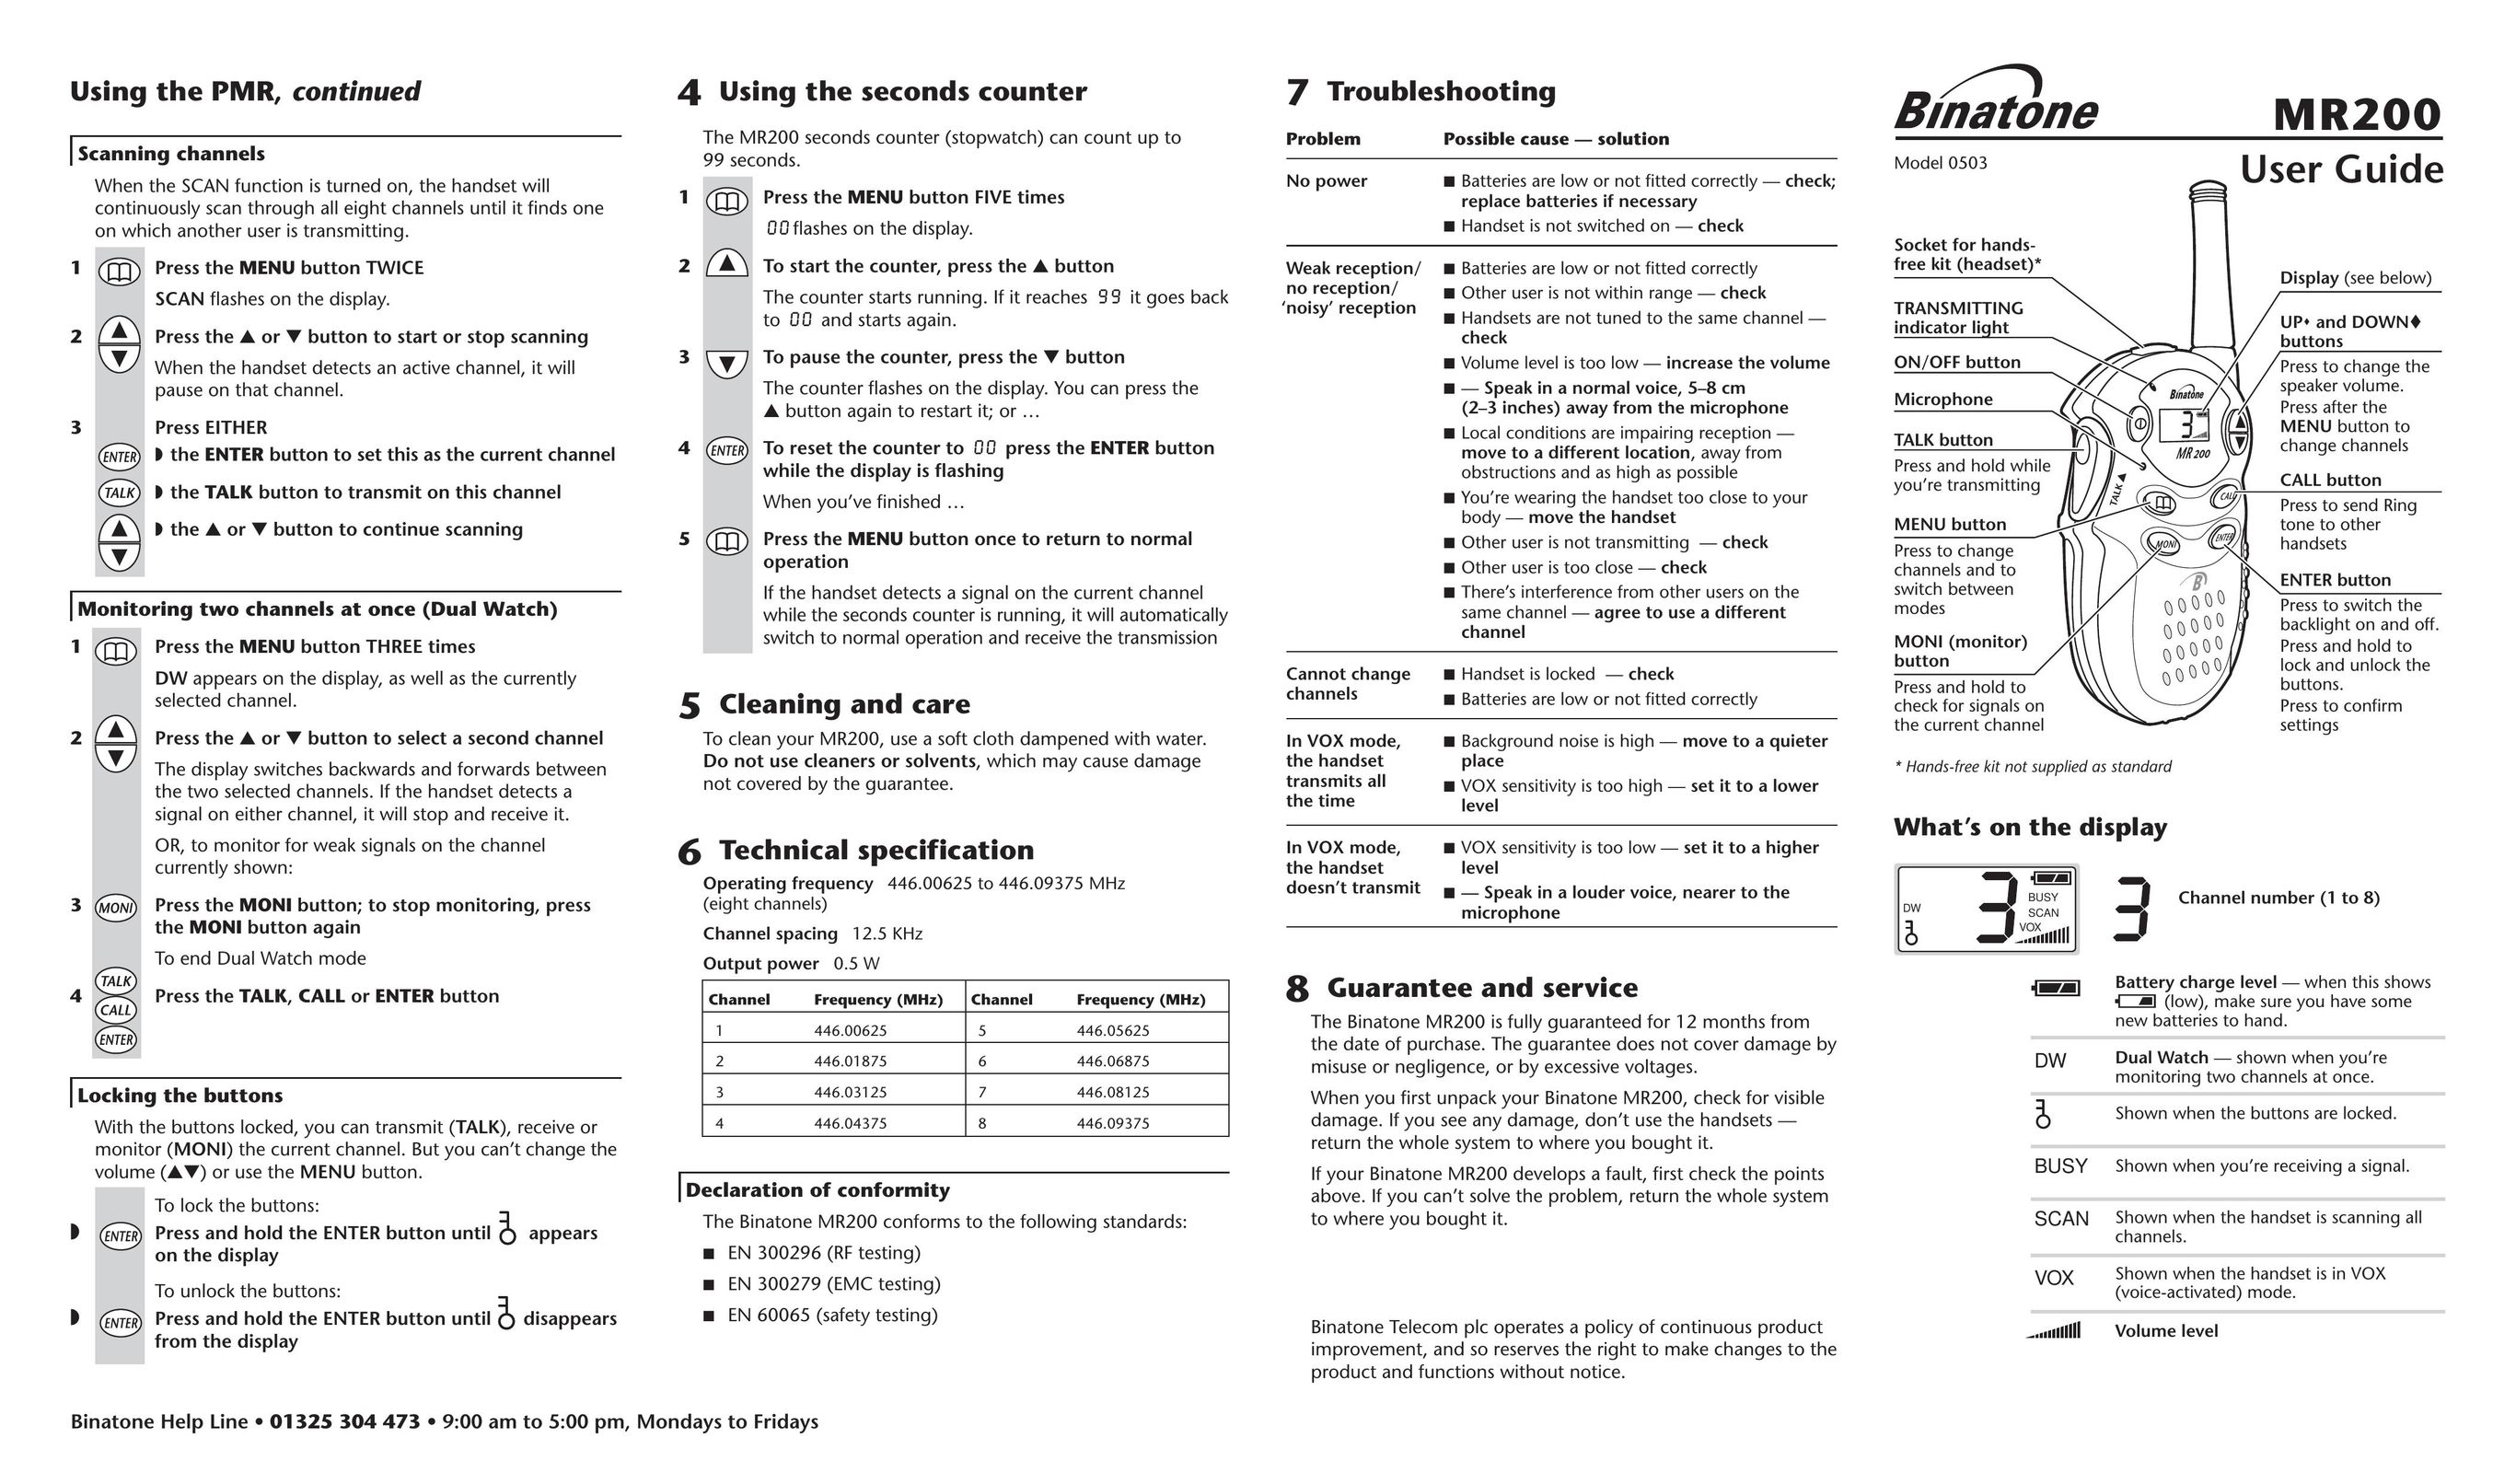 Dynatron MR200 Telephone User Manual